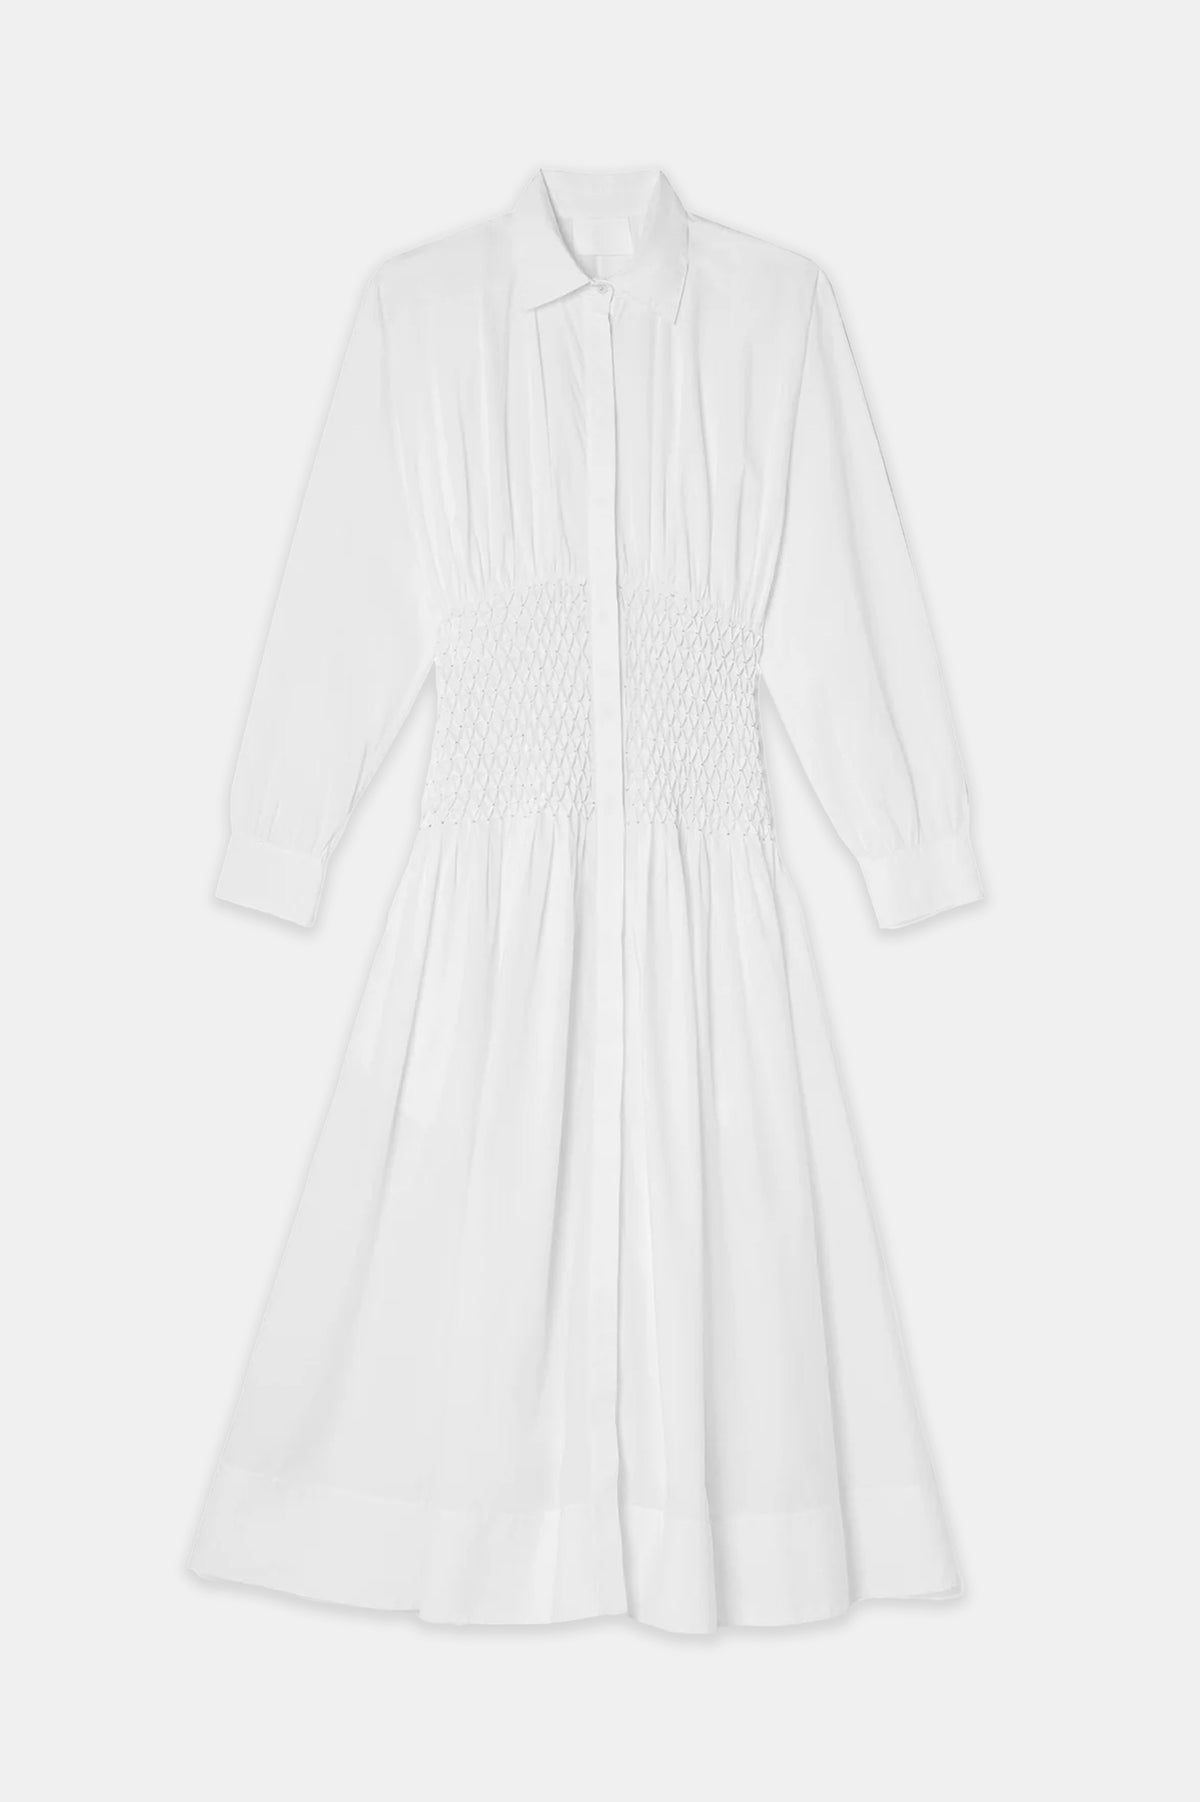 Jordan Honeycomb Dress in White